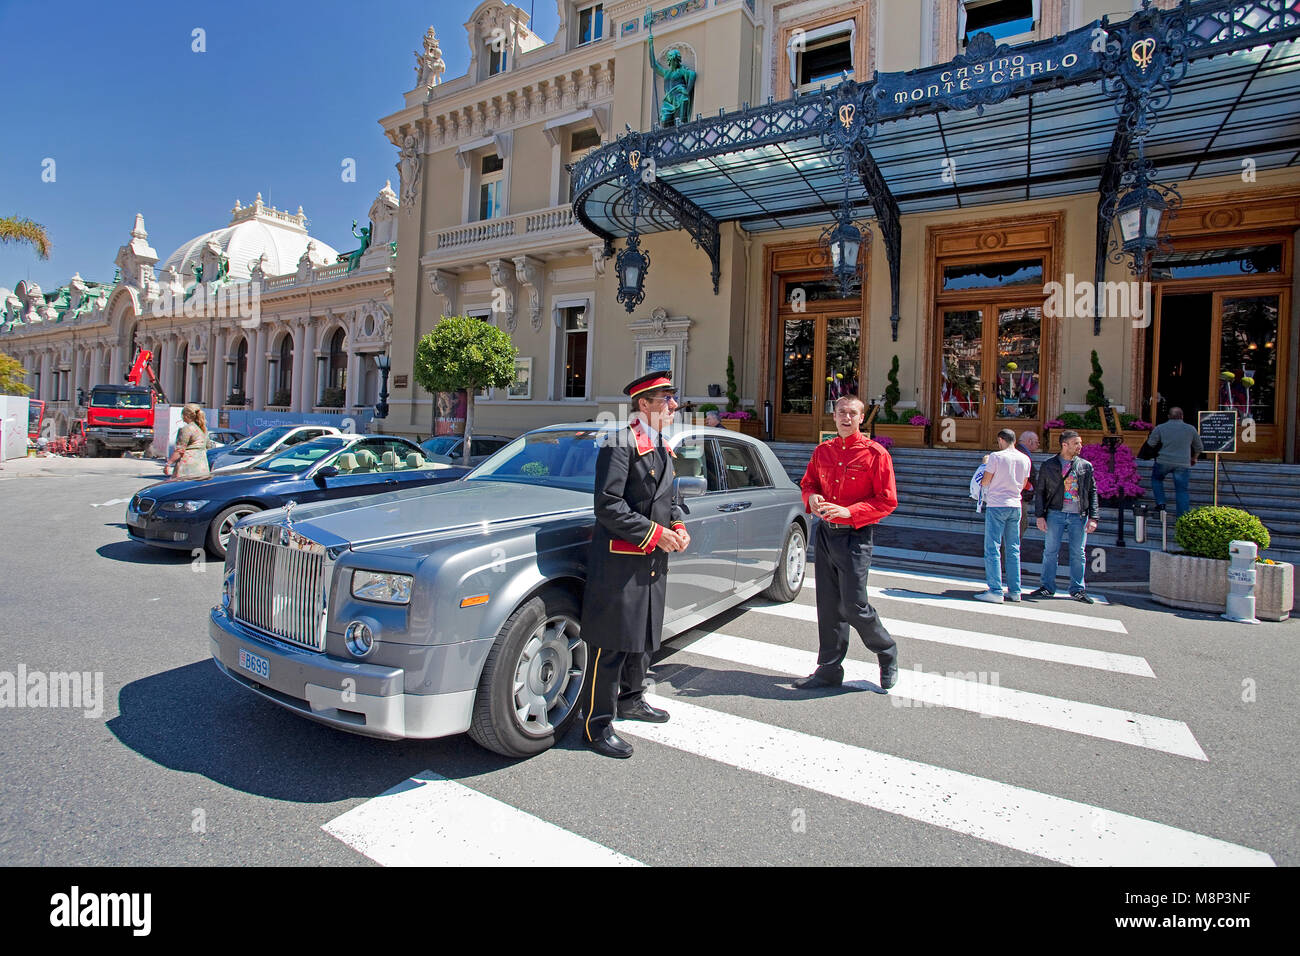 Rolls Royce and Chauffeur at Casino Monte-Carlo, Place du Casino, Monte Carlo, Principality of Monaco, Côte d'Azur, french riviera, Europe Stock Photo